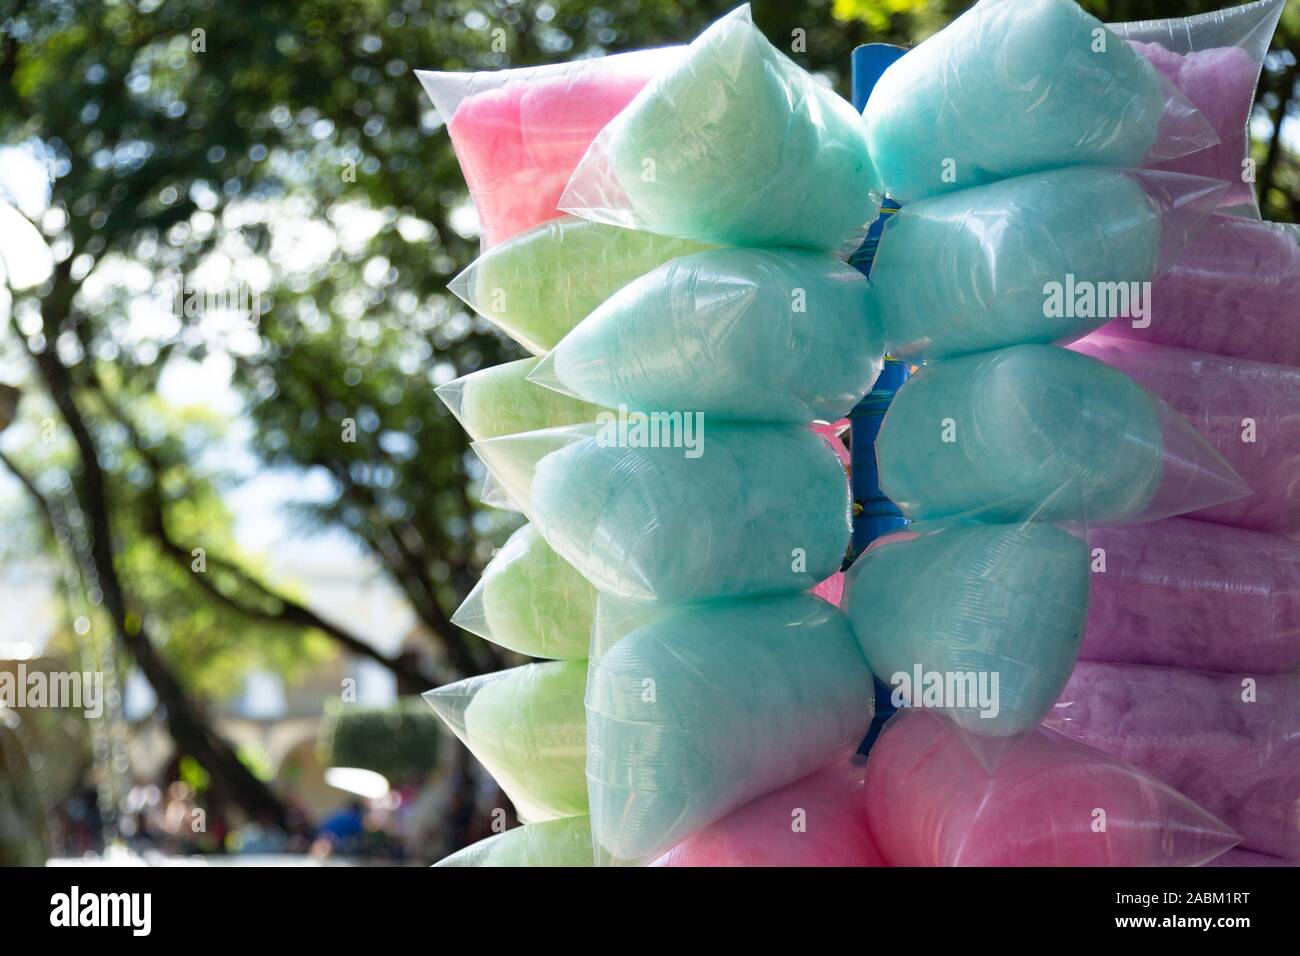 Vendedor de algodón de azúcar en bolsas de plástico Fotografía de stock -  Alamy